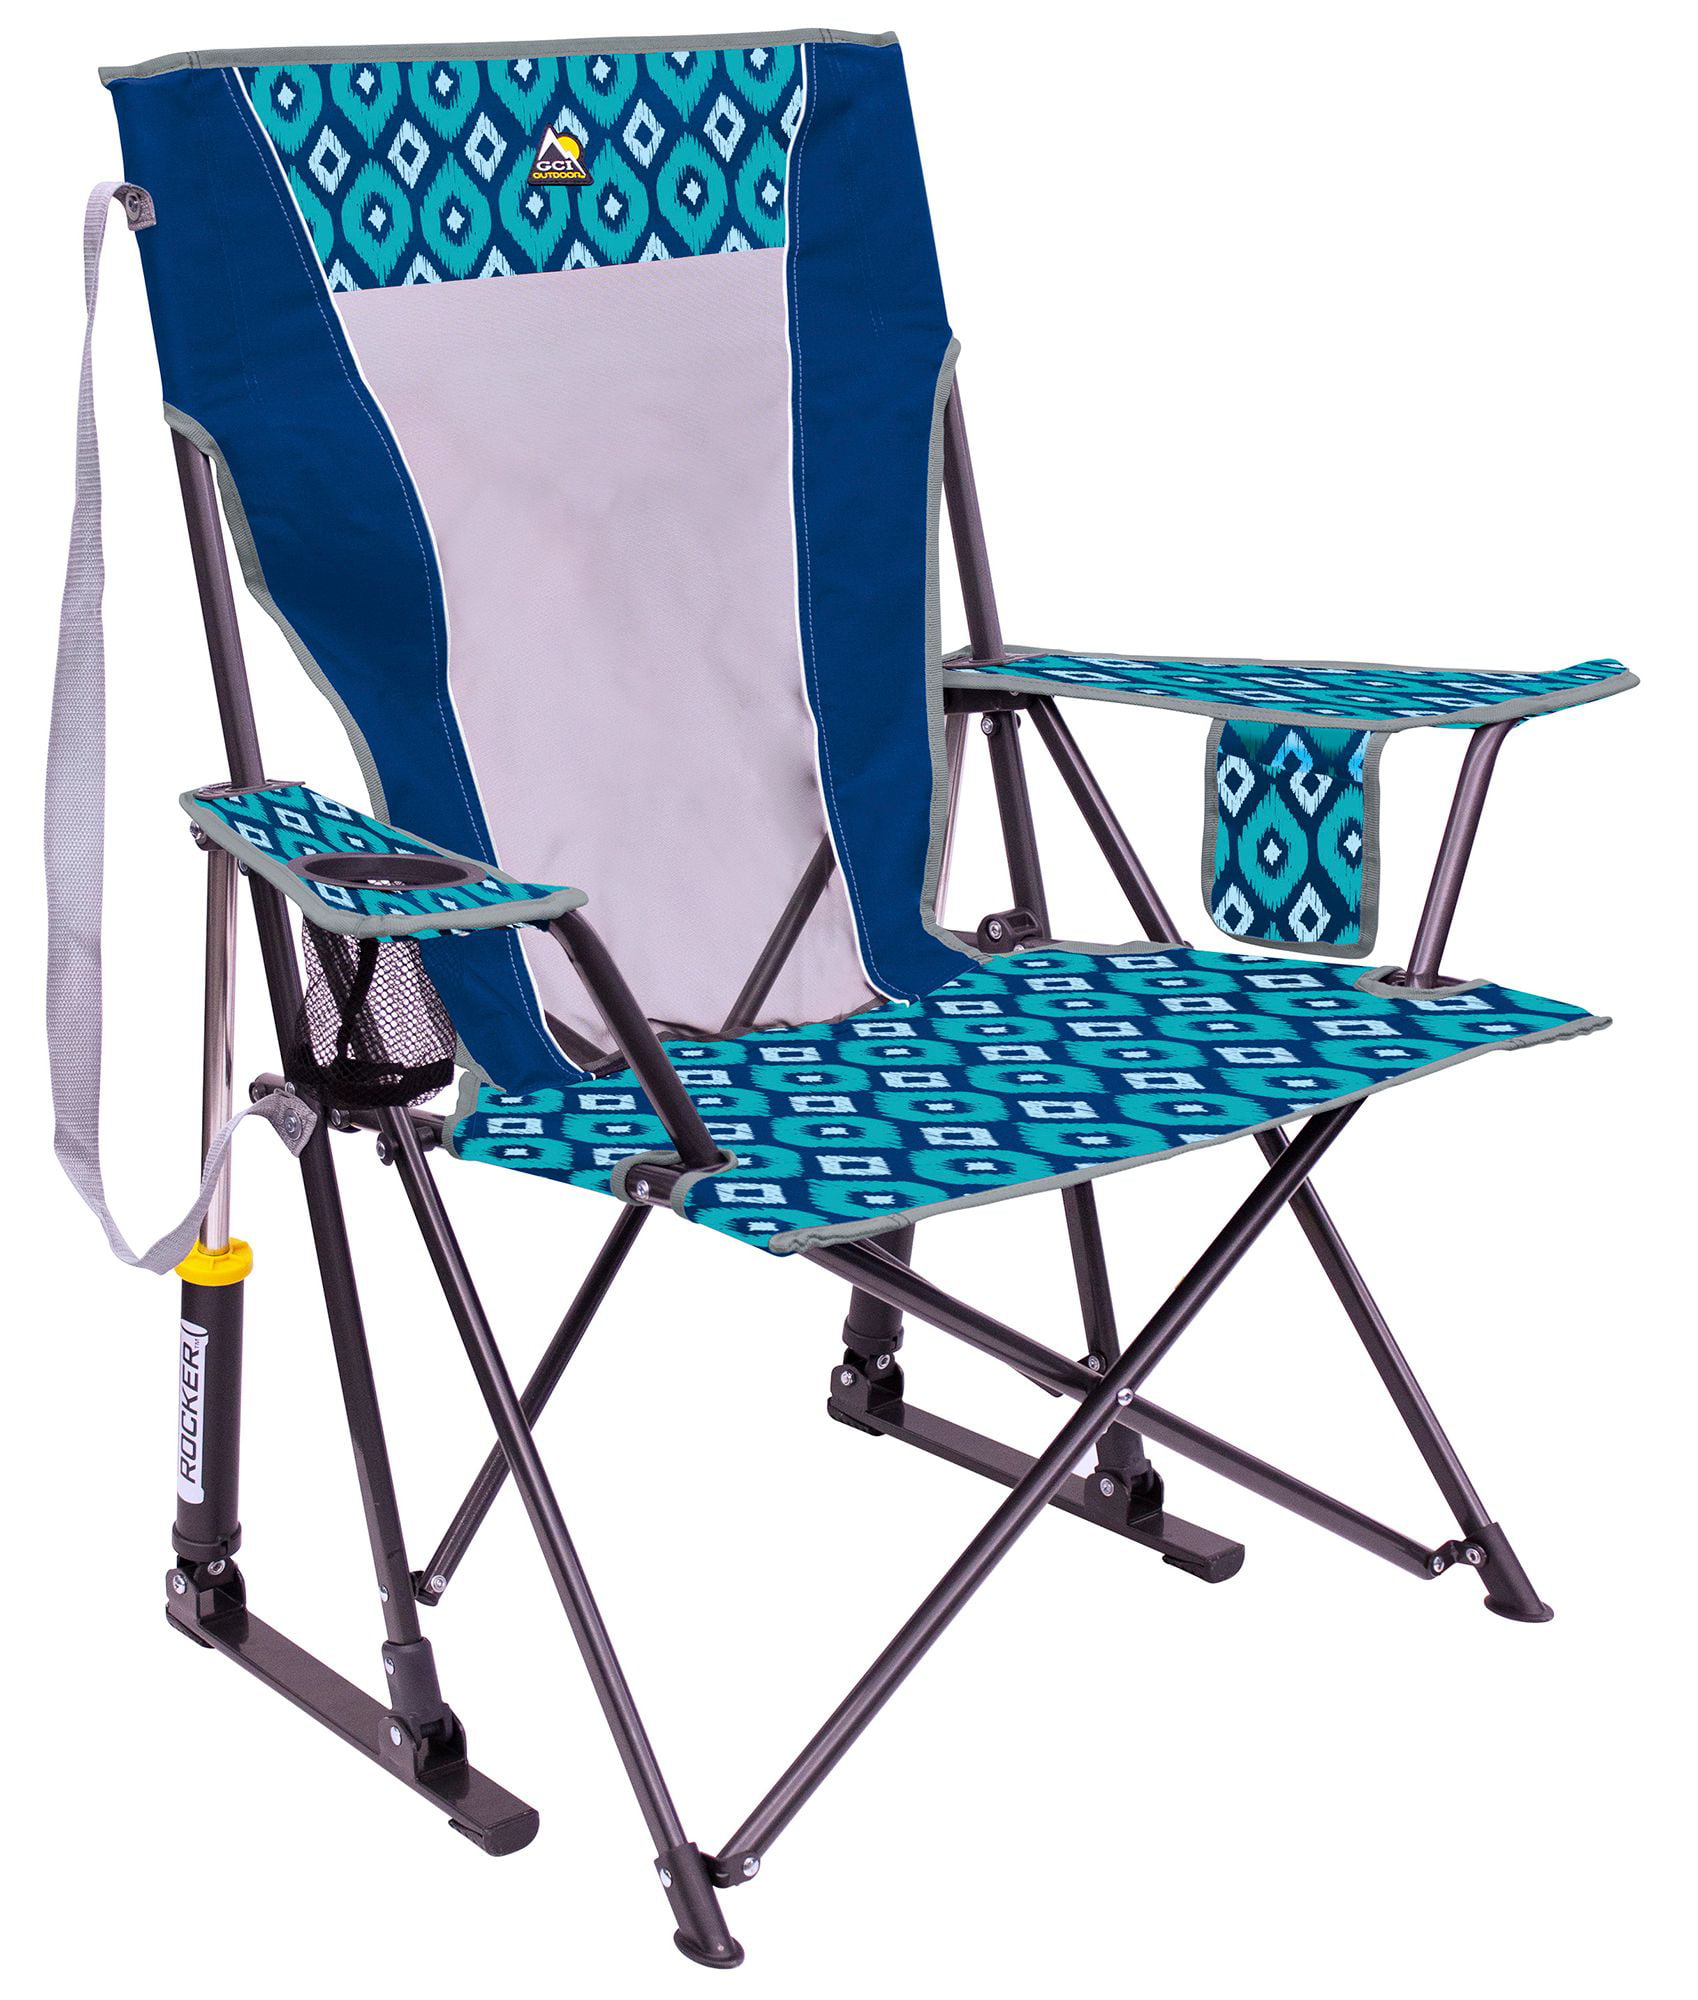 Gci Outdoor Comfort Pro Rocker Chair, Lawn Chair Rocker With Shocks